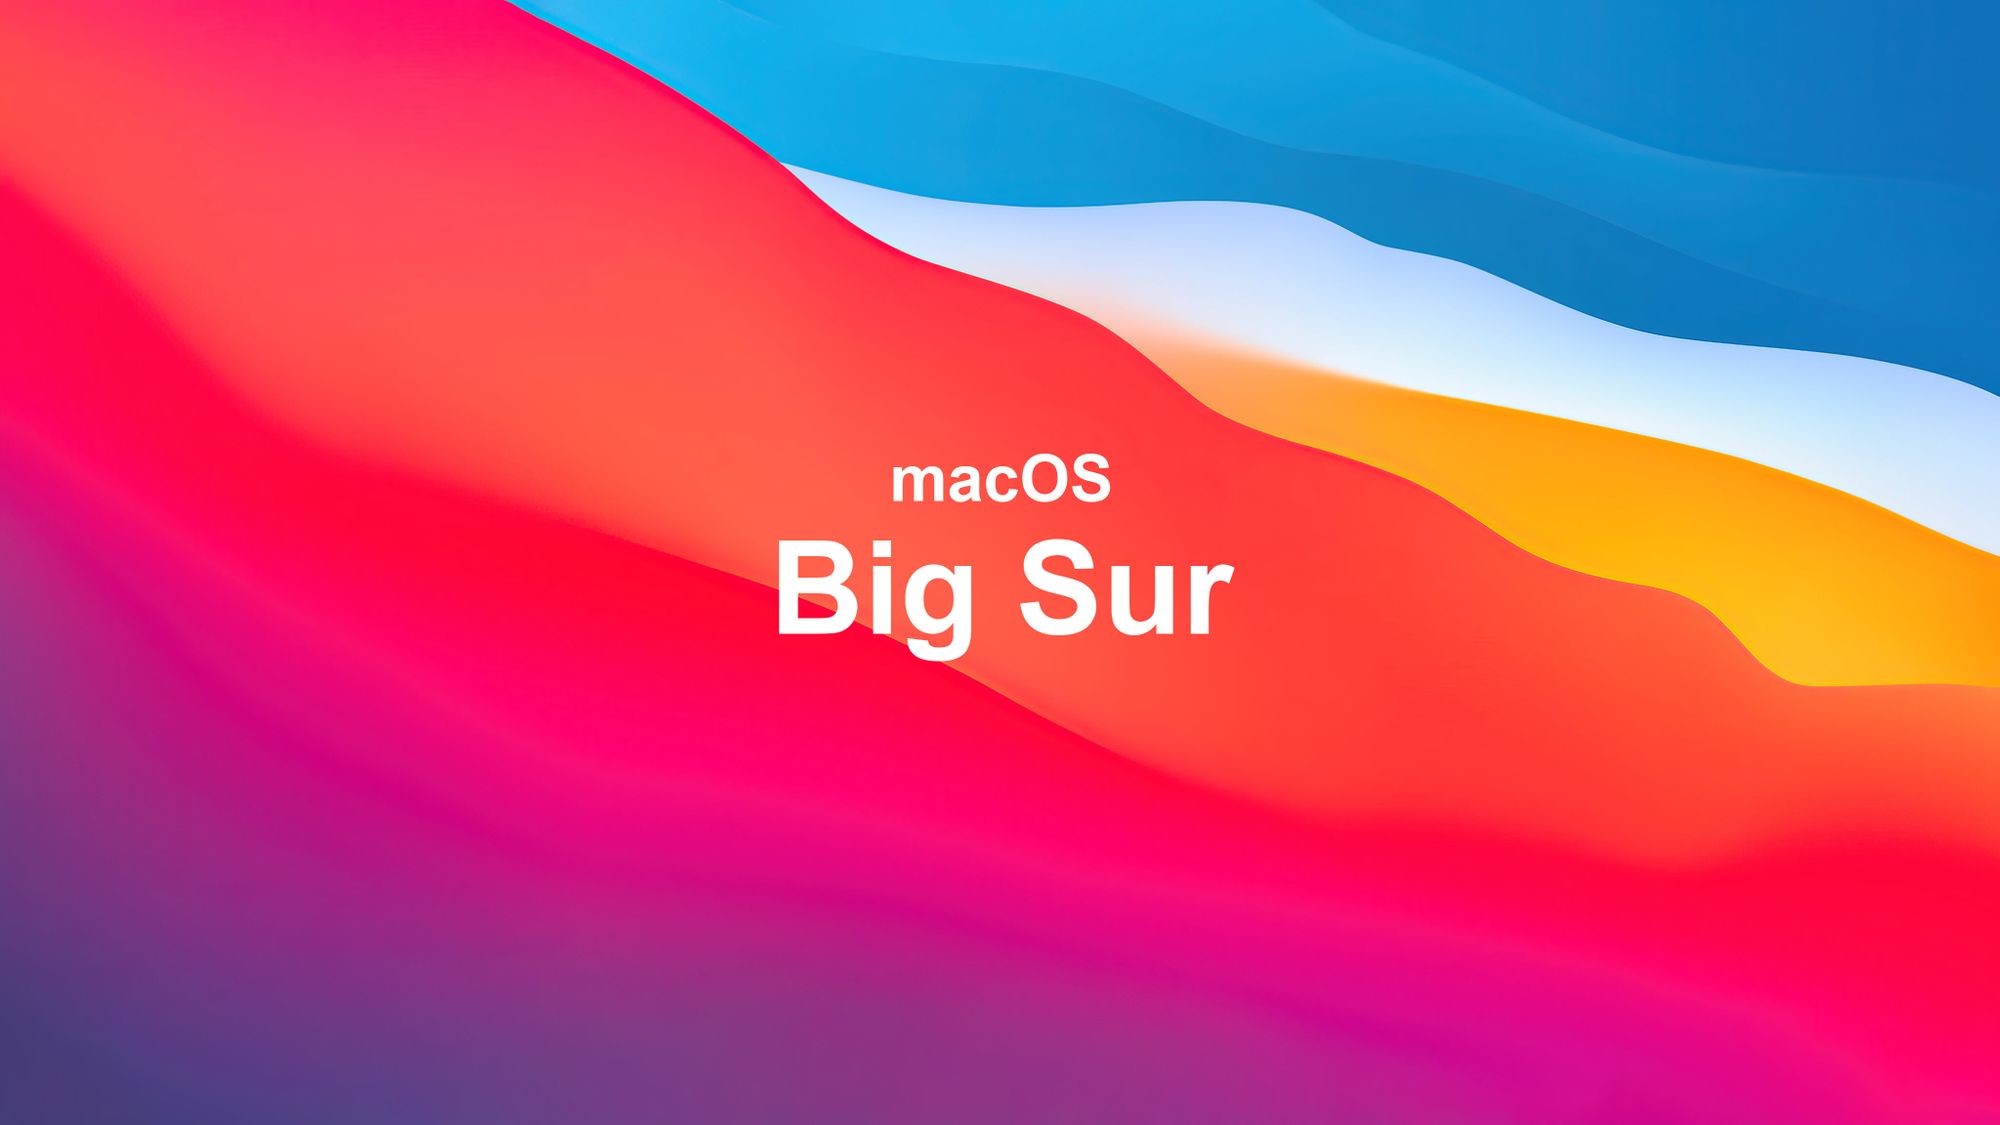 discord for mac big sur